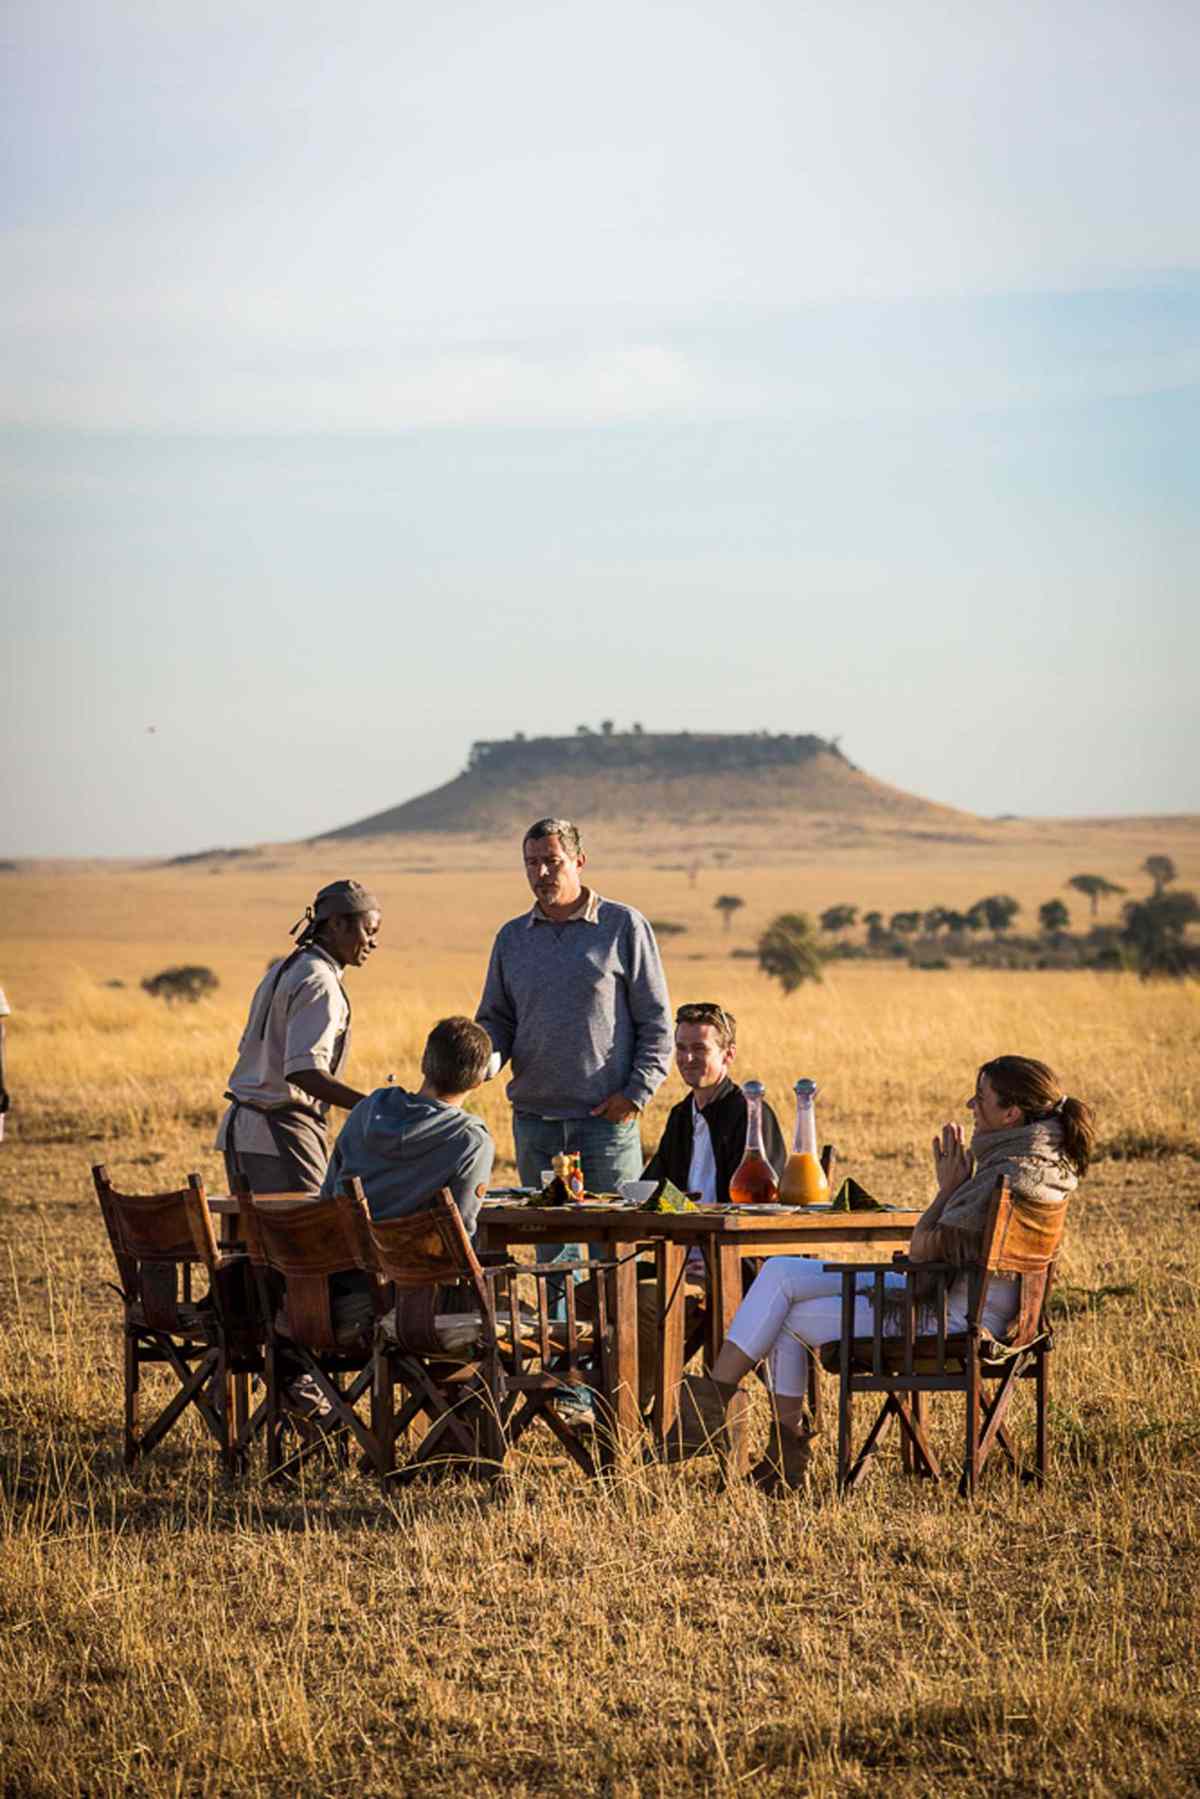 Bush dining at Sayari Camp Safari in Serengeti